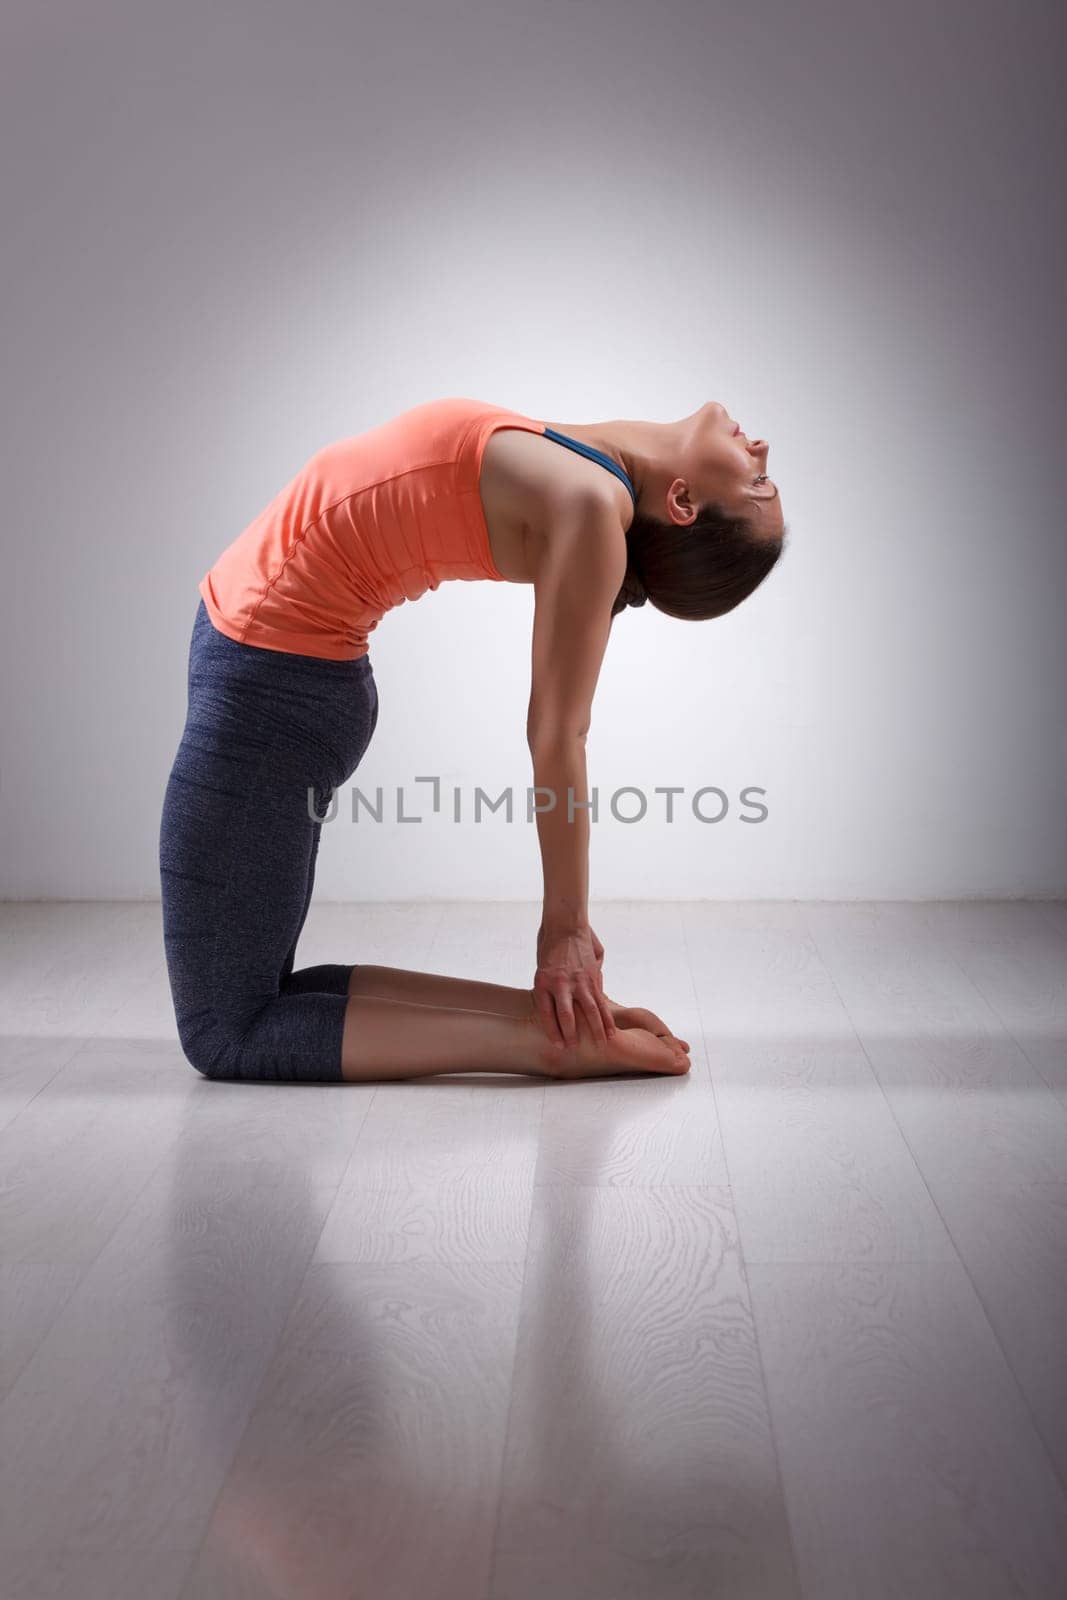 Beautiful sporty fit yogini woman practices yoga asana ustrasana - camel pose in studio